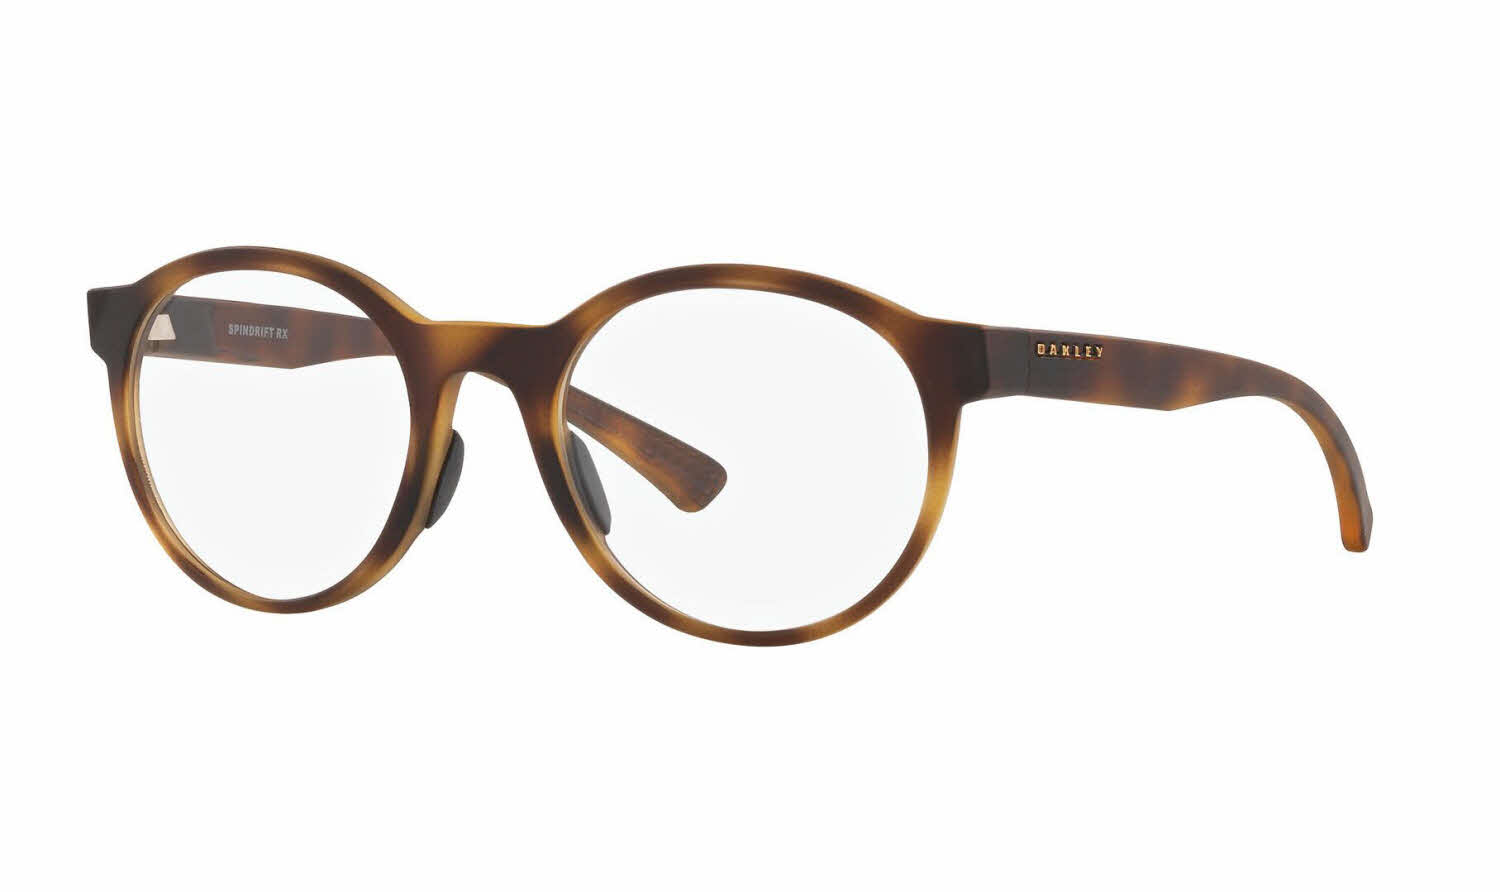 Oakley Spindrift RX Eyeglasses